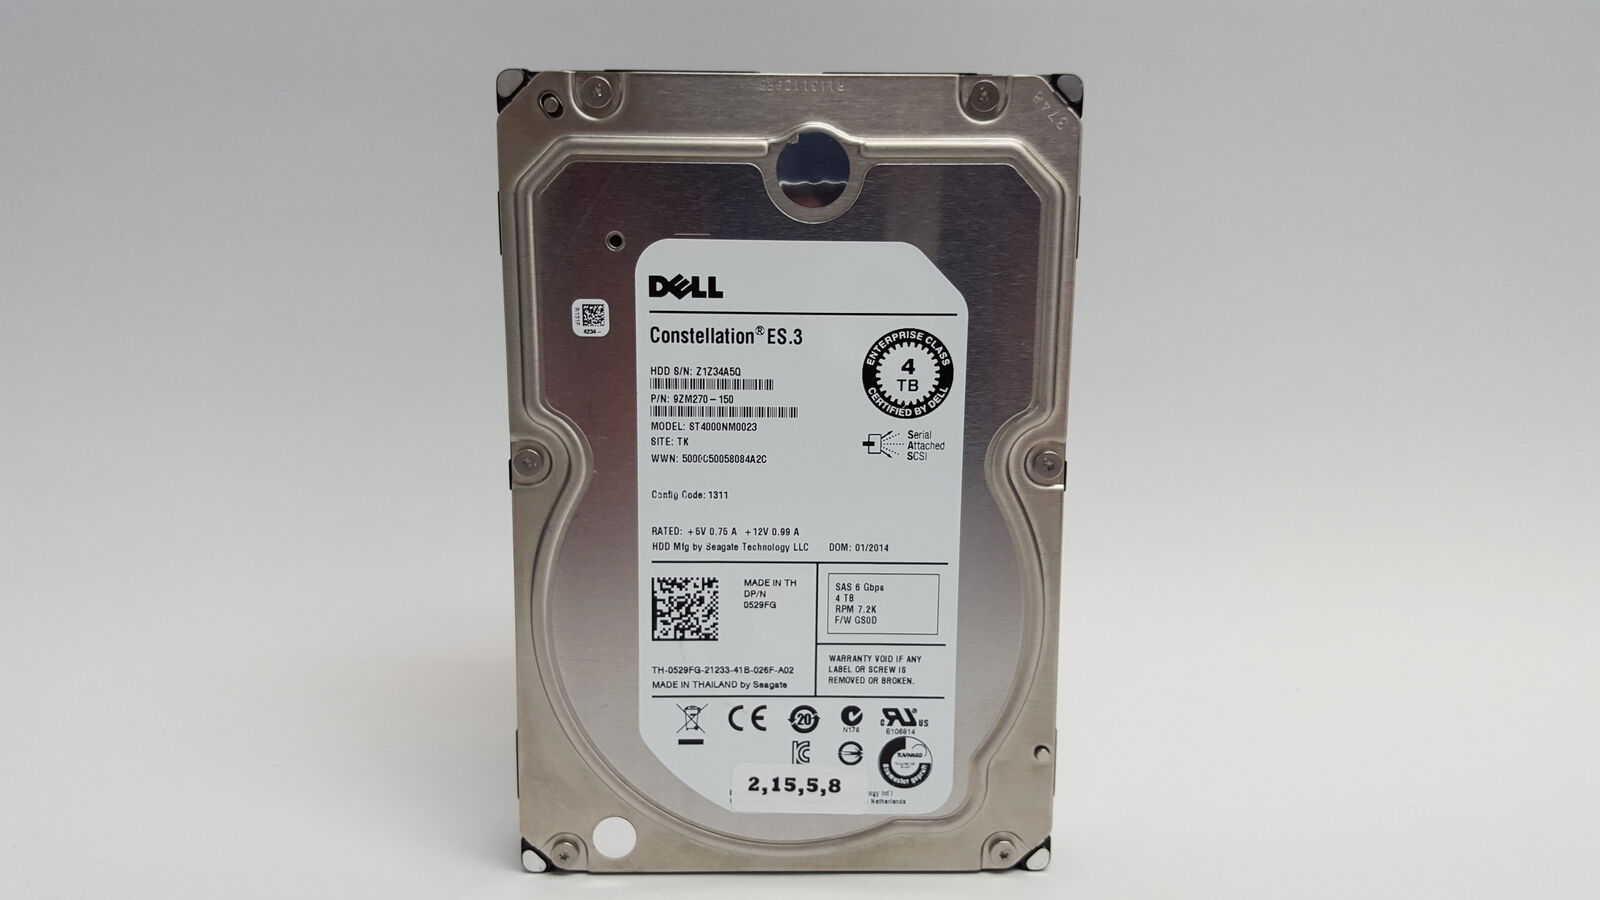 Lot of 10 Seagate Dell ST4000NM0023 4 TB SAS 2 3.5 in Enterprise Hard Drive